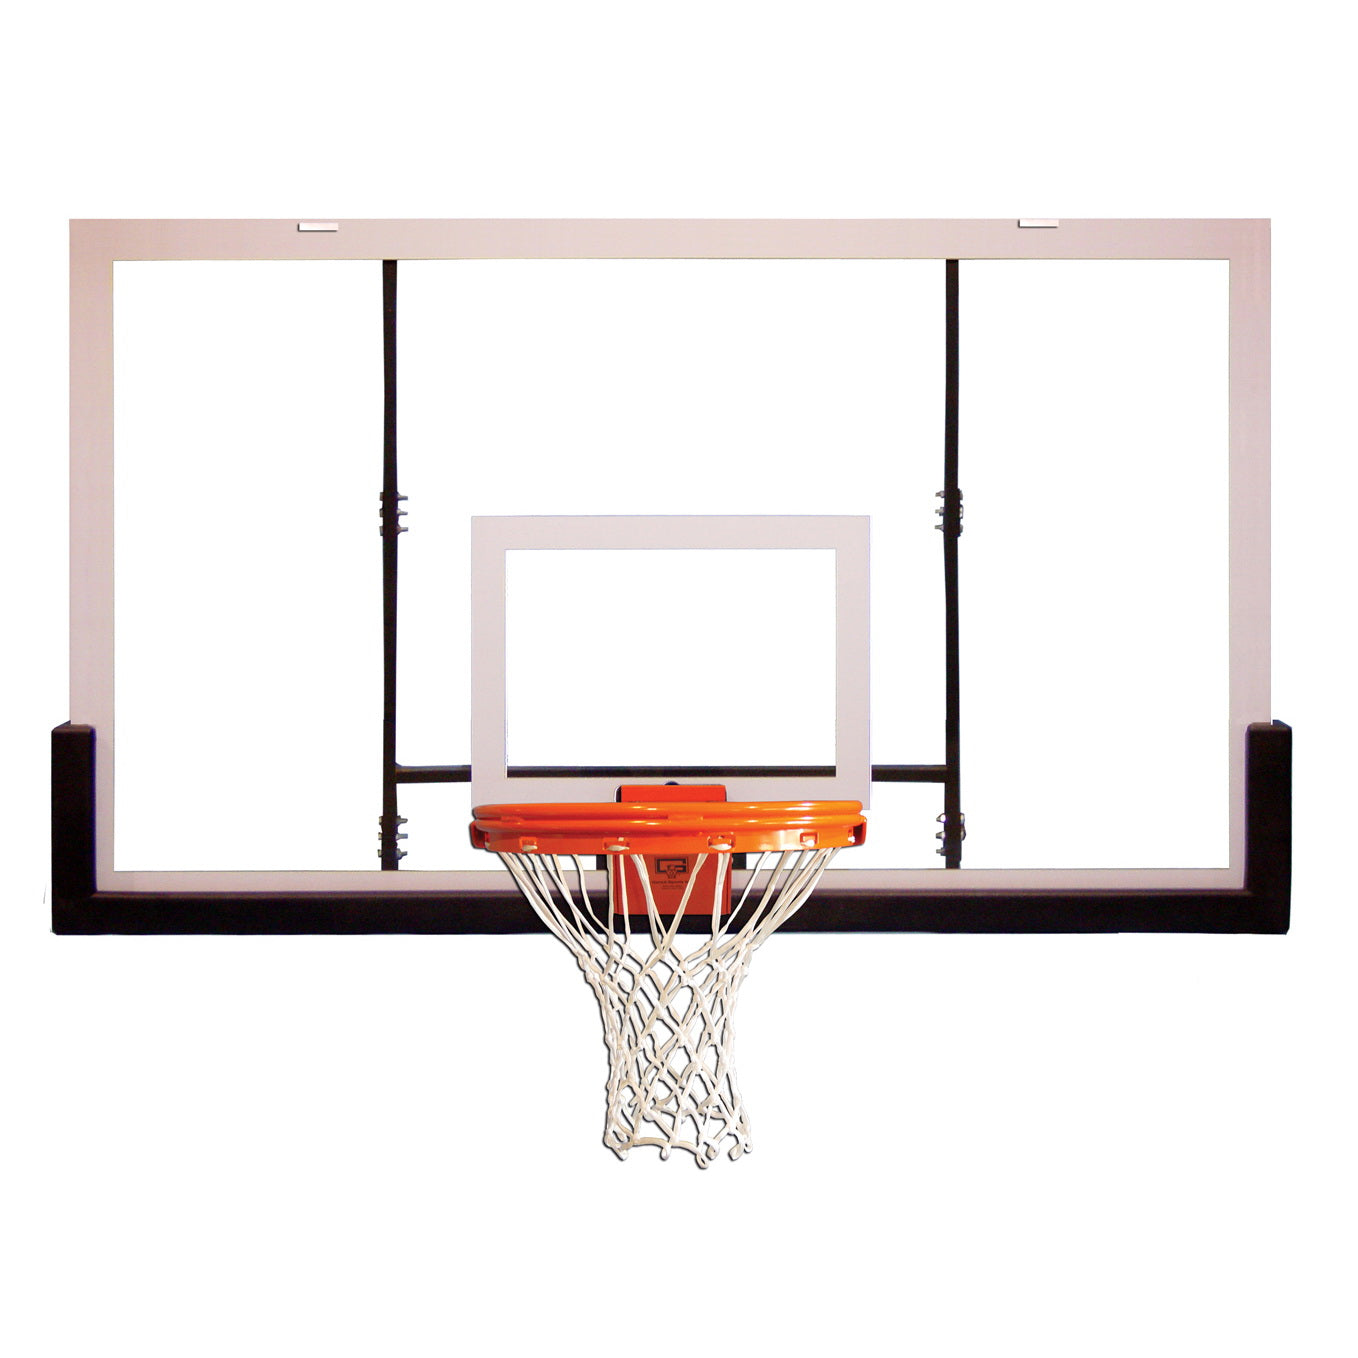 Gared Unbreakable Polycarbonate Basketball Backboard